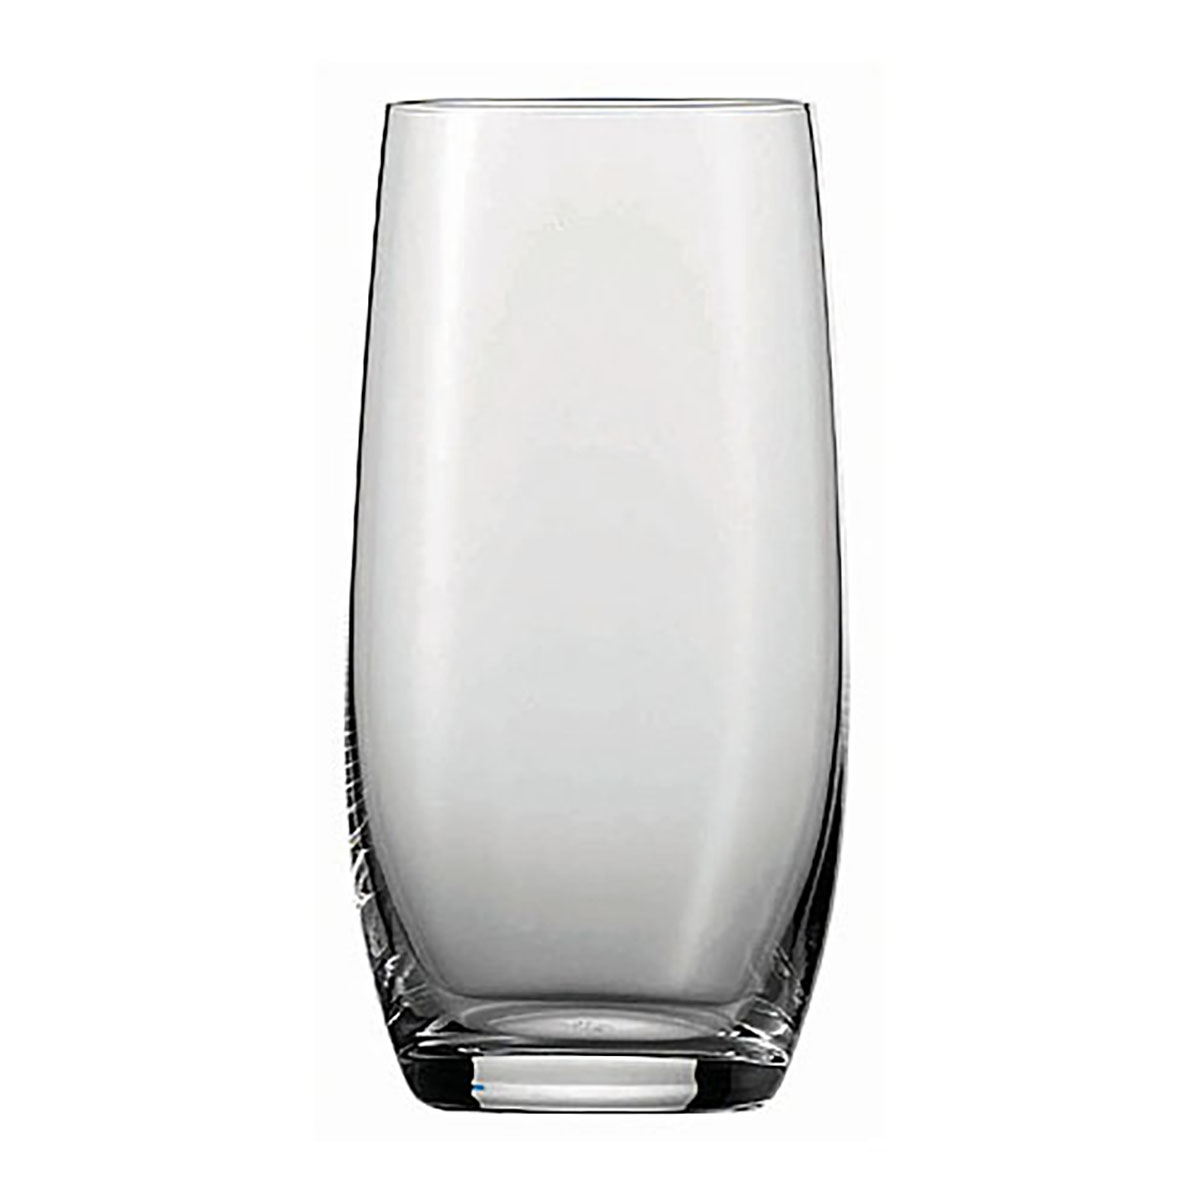 Schott Zwiesel Tritan Crystal, Banquet Crystal Hiball Glass, Set of Six